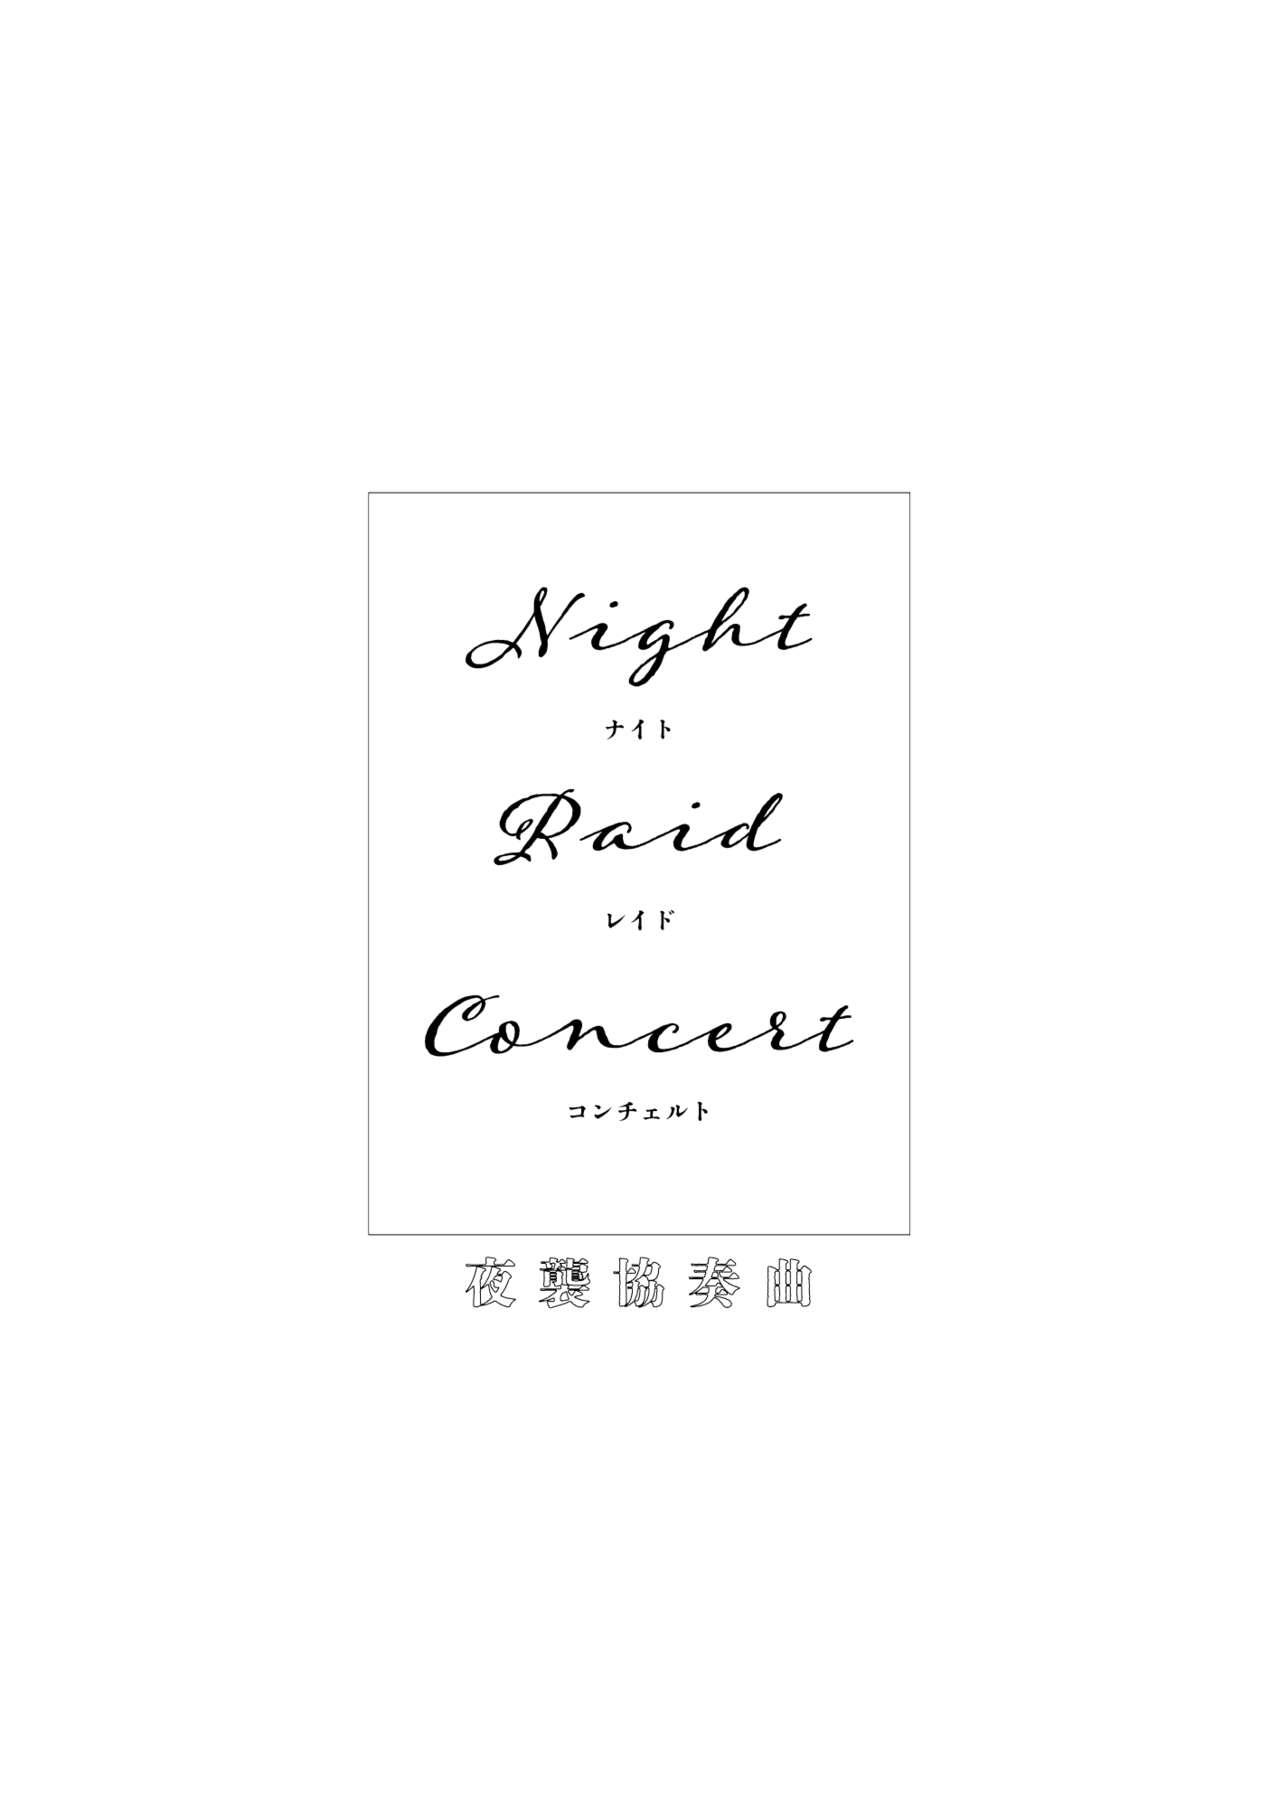 Night raid concert